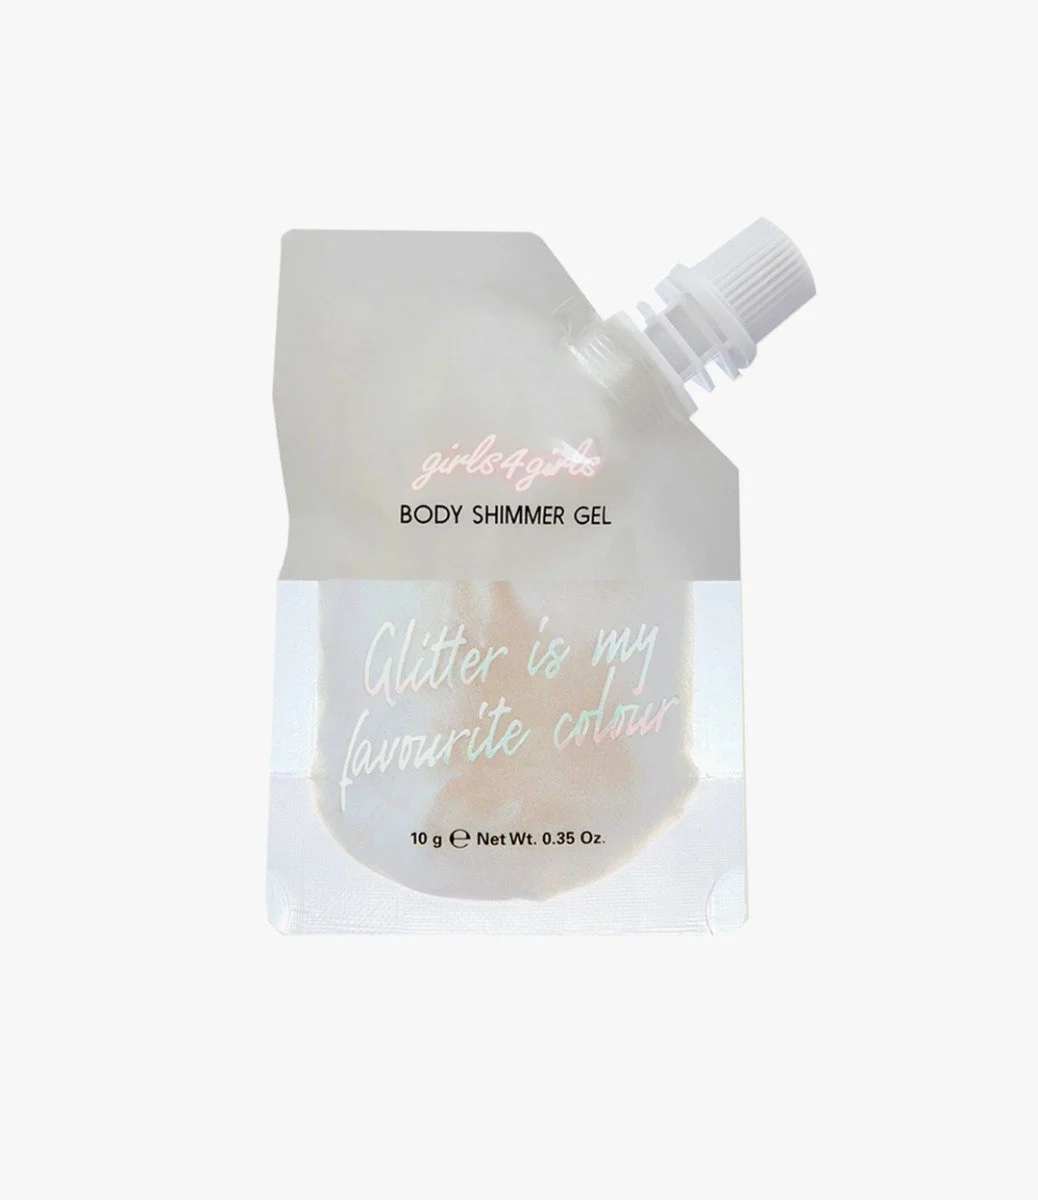 Body Shimmer Gel - White Glitter is my favourite colour 10g By Girls 4 Girls